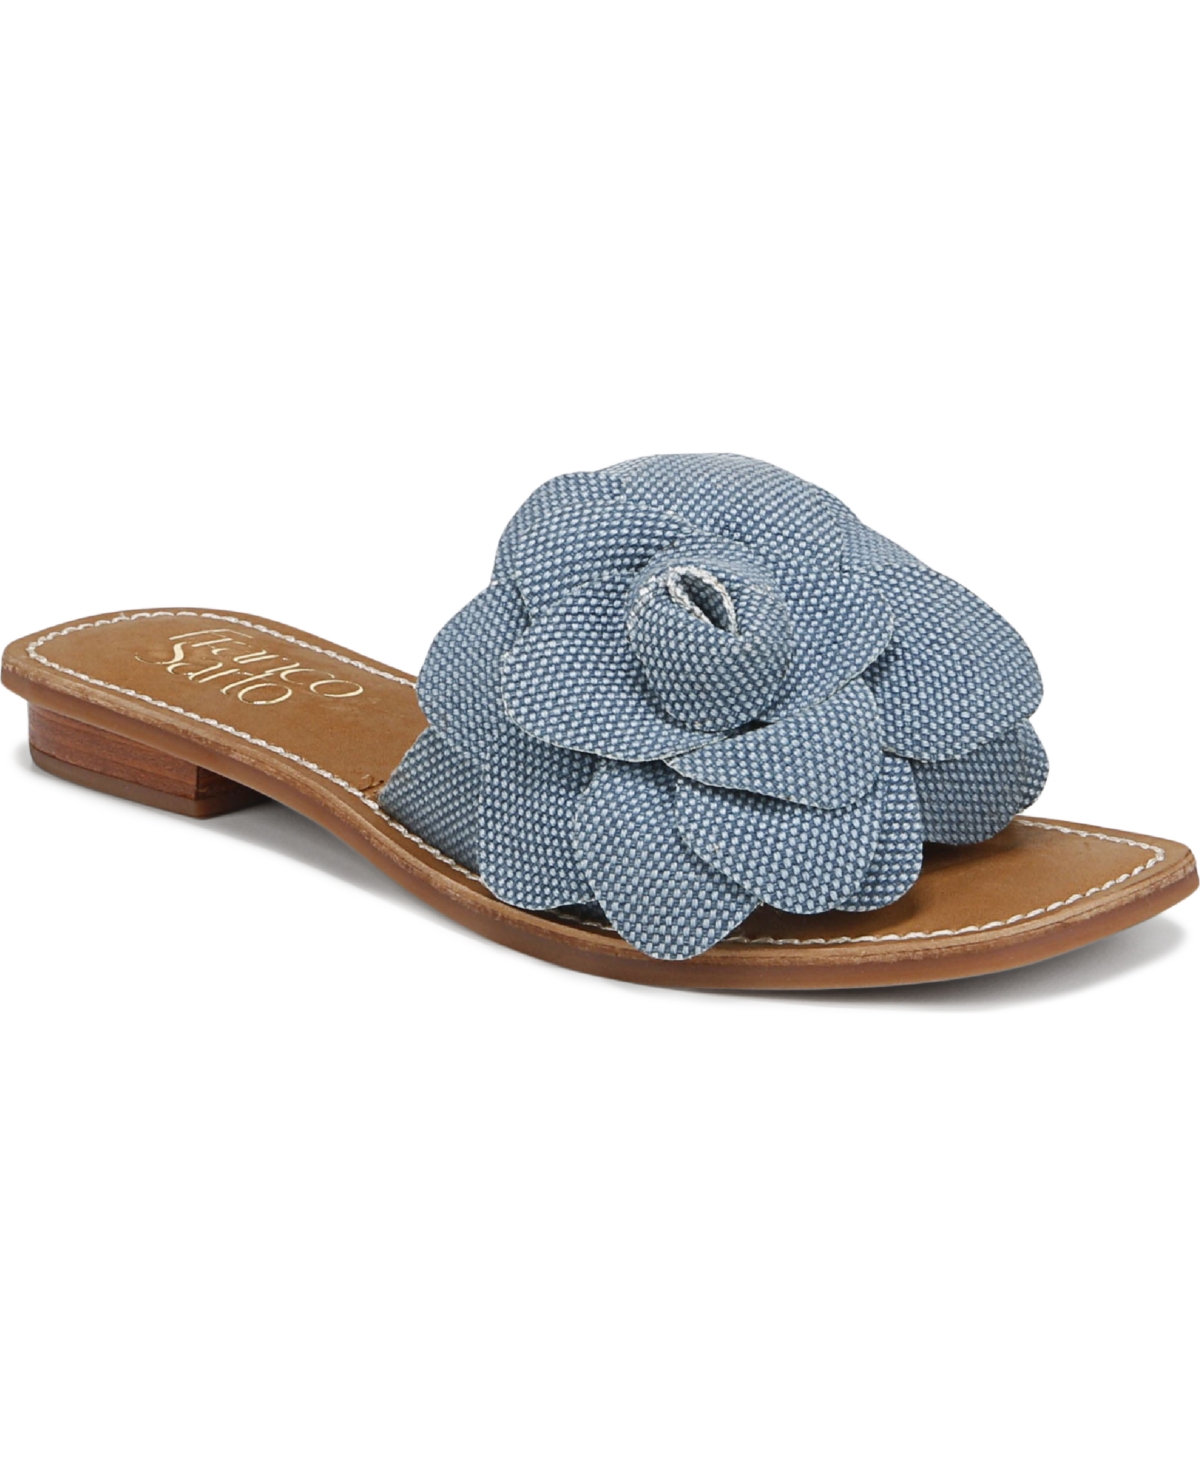 Women's Tina 4 Slide Sandals - Denim Blue Fabric